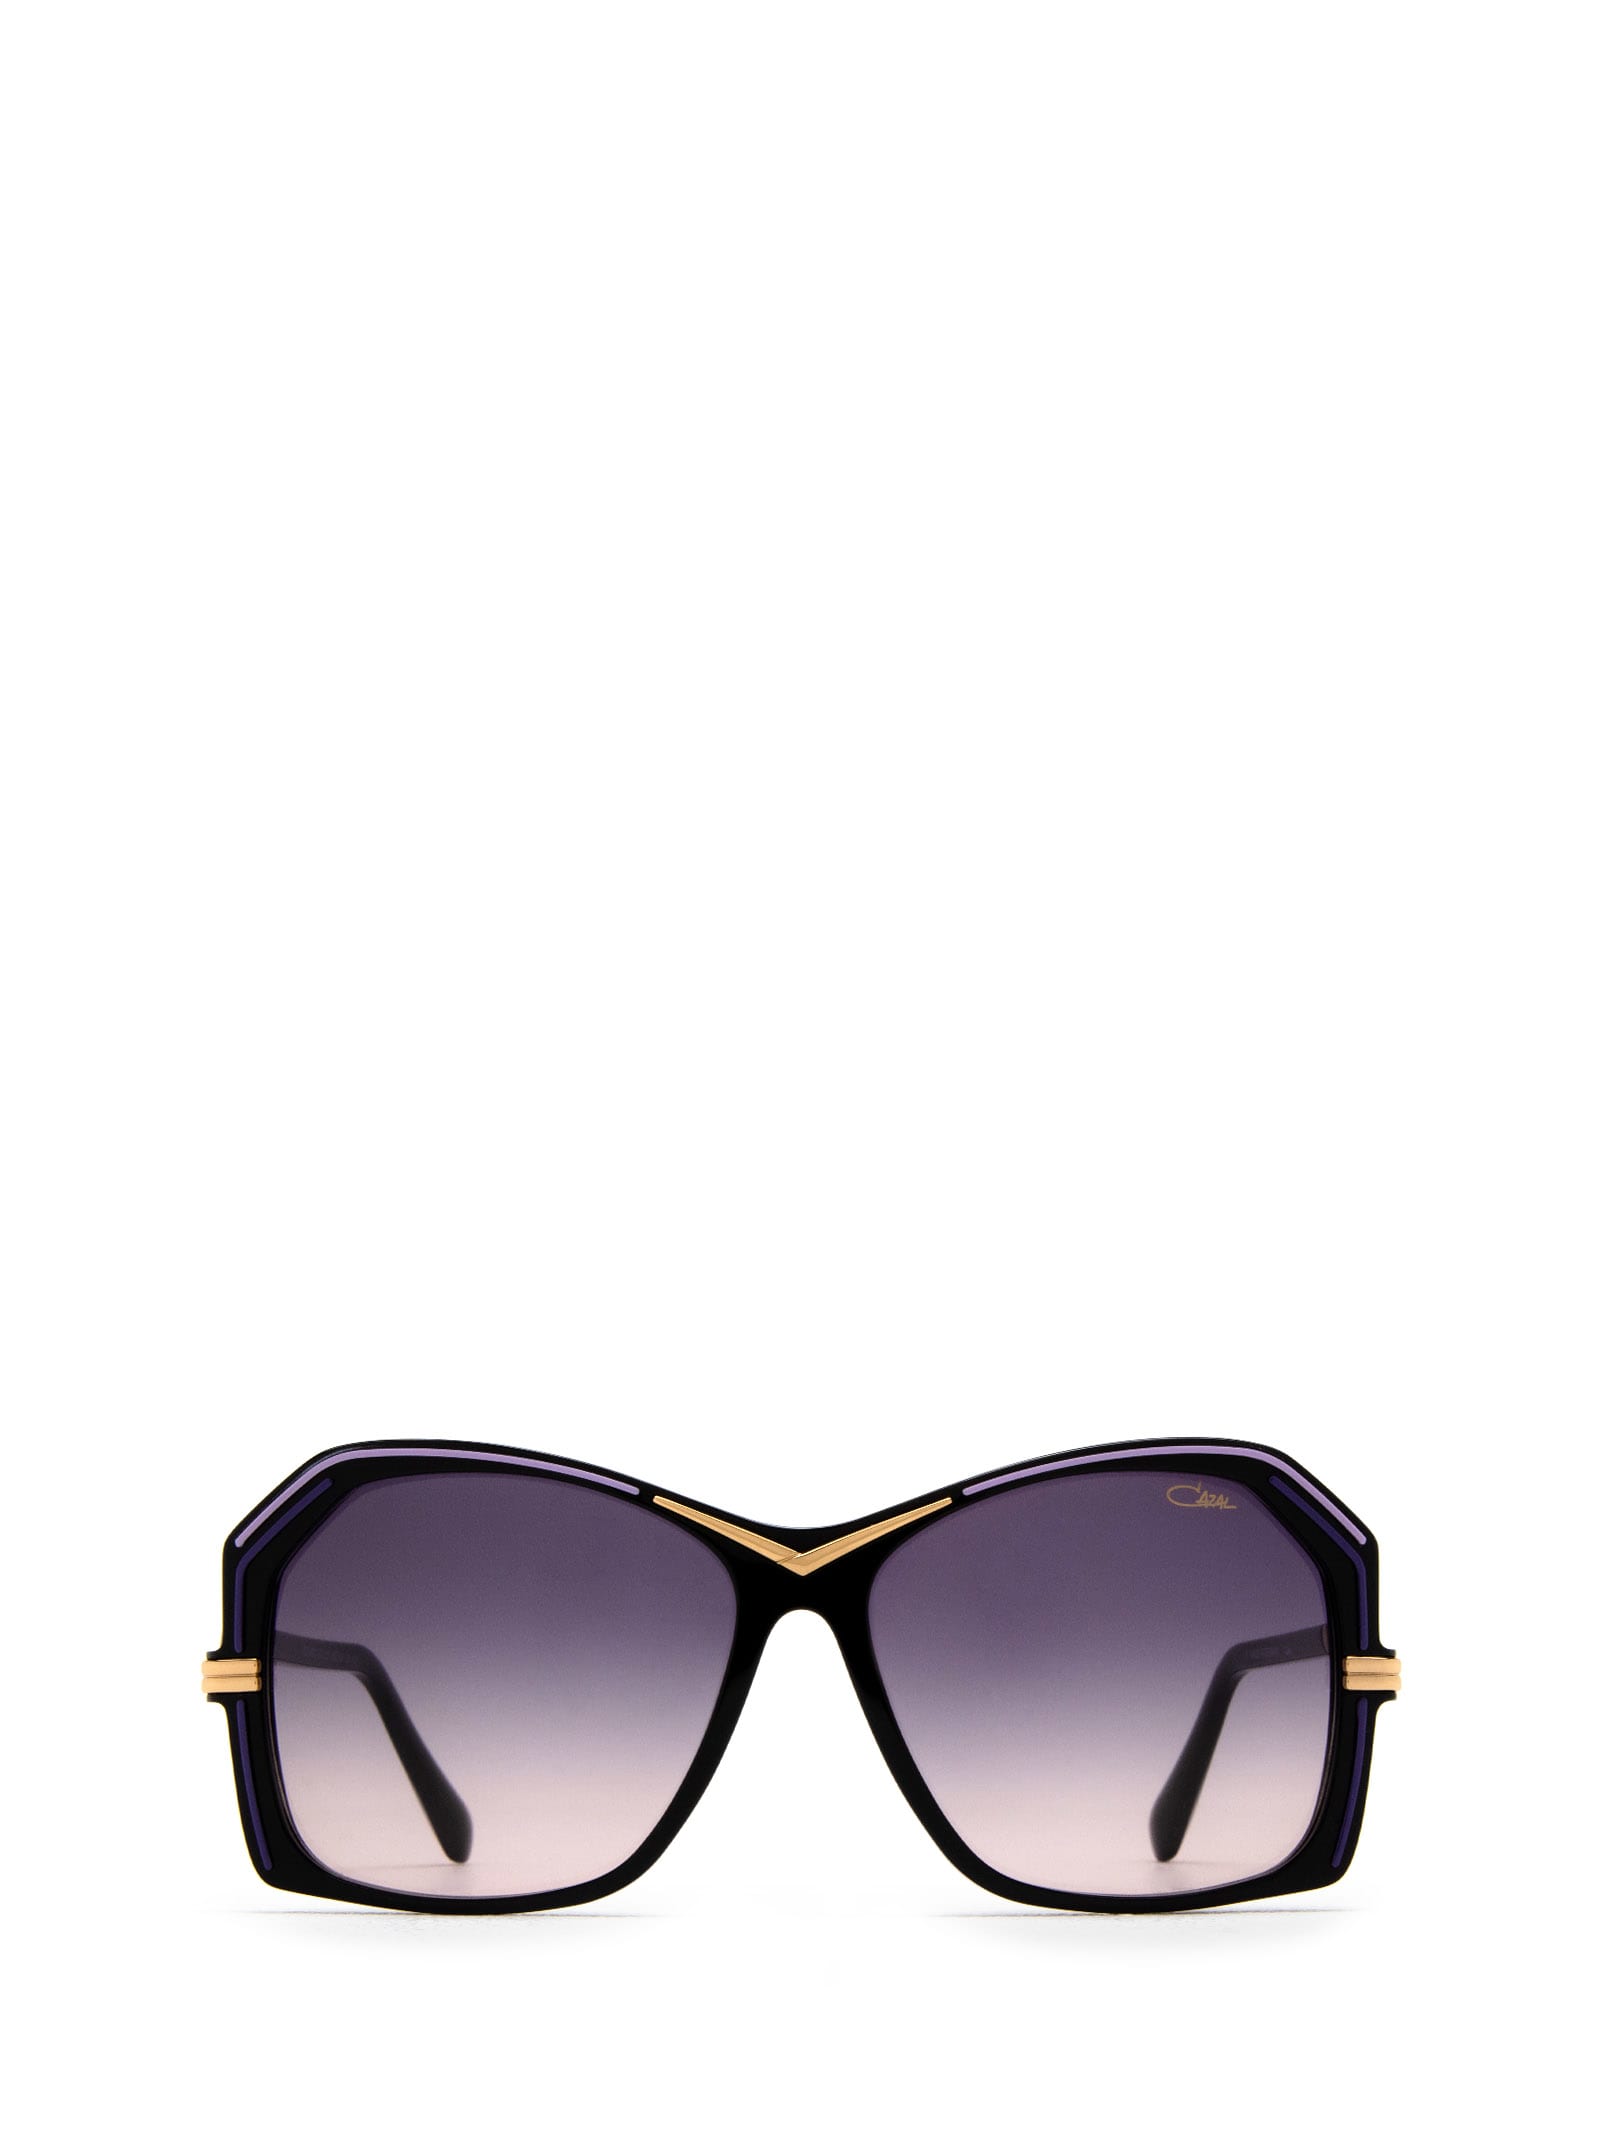 Cazal 8510 Black - Violet Sunglasses